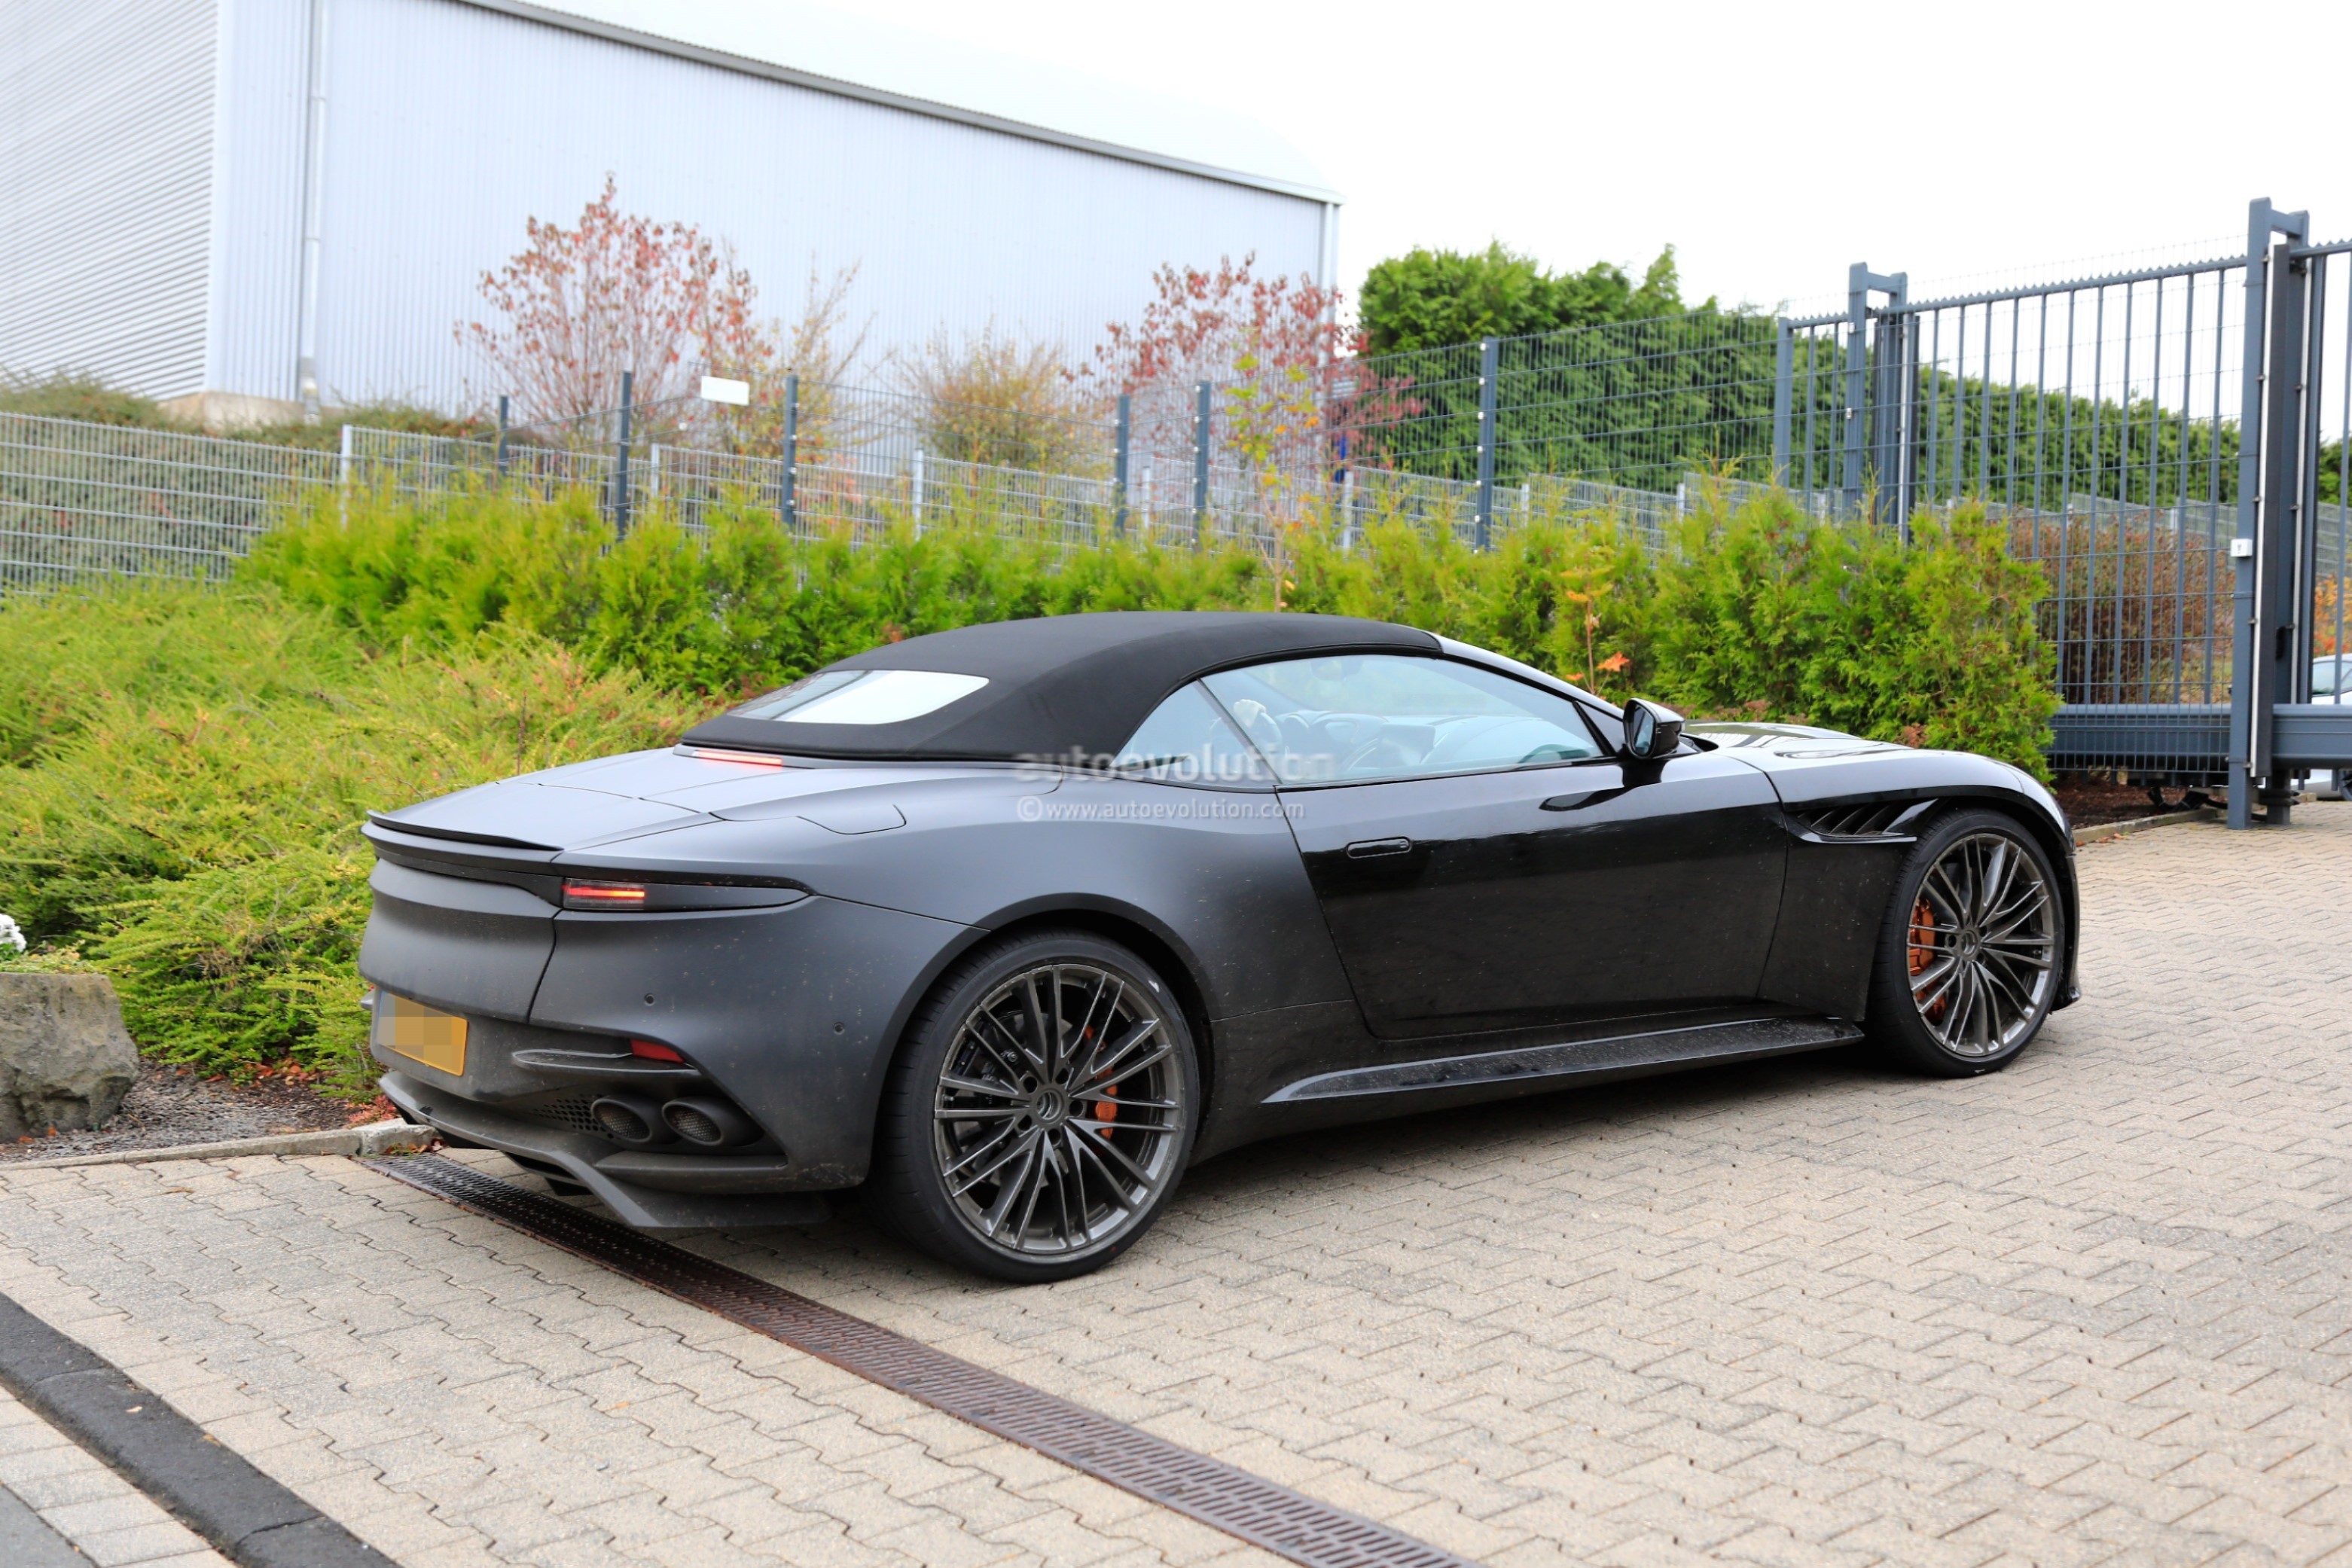 Aston Martin DBS Superleggera mod big